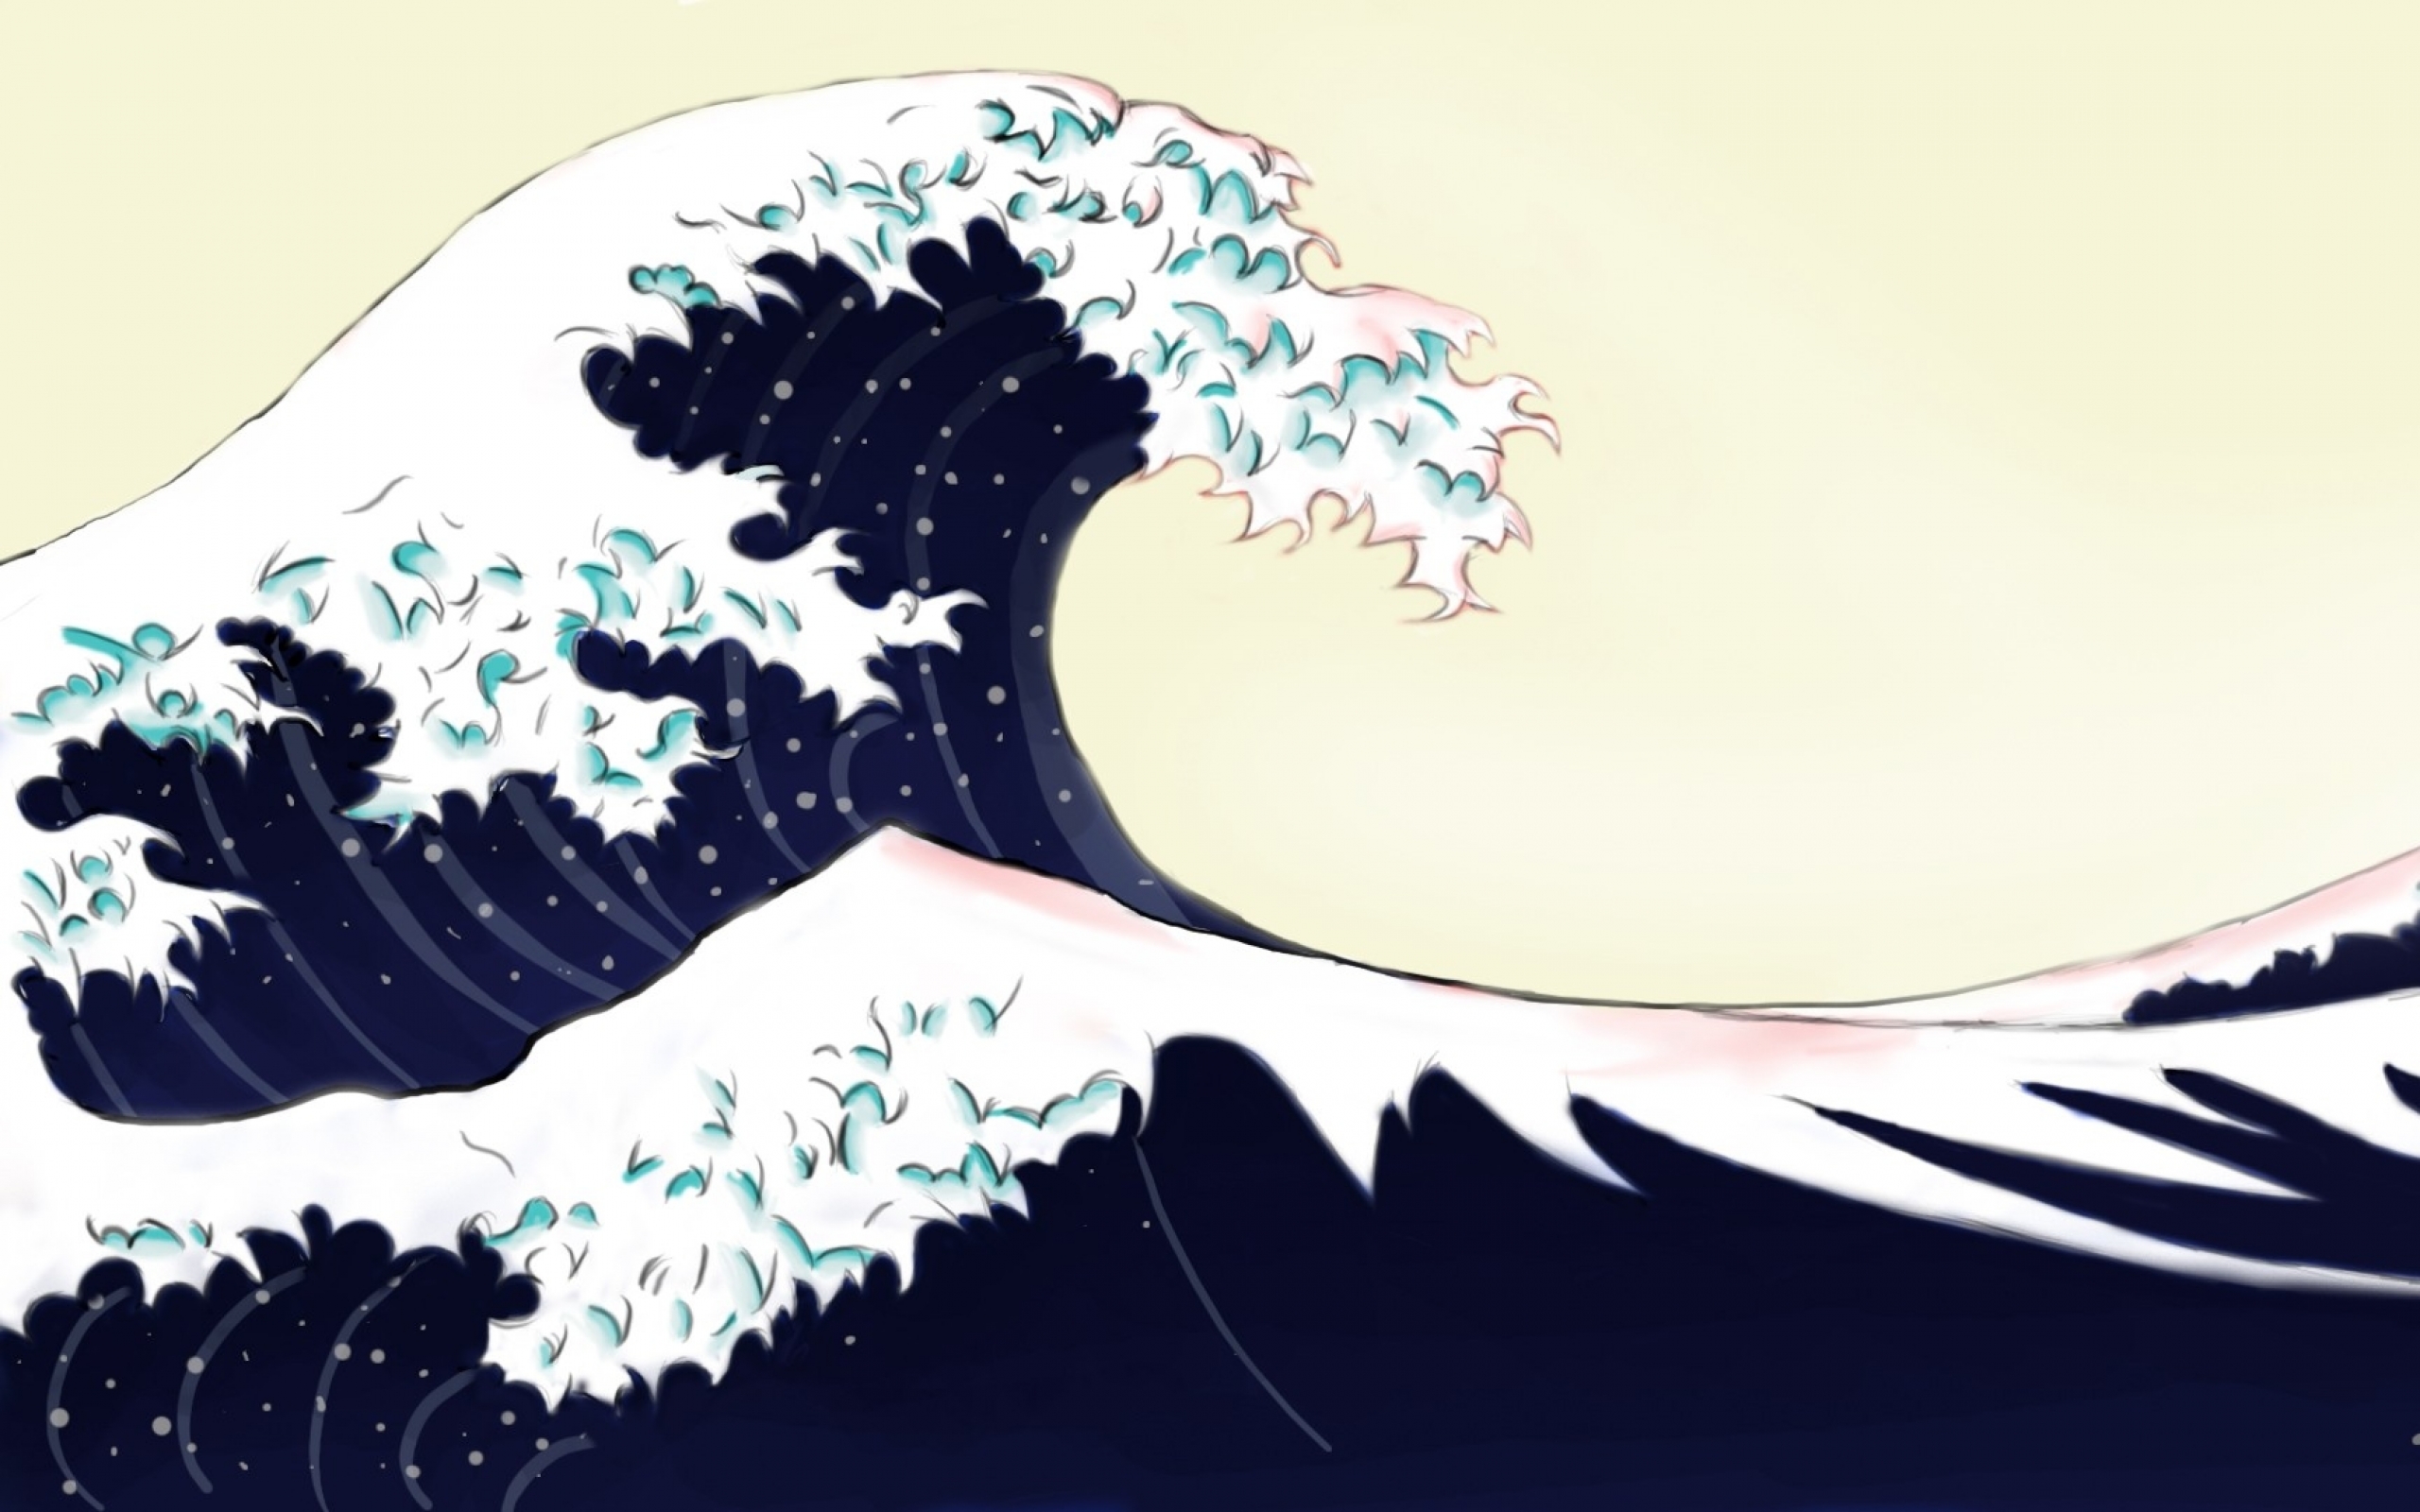 waves japanese artwork the great wave off kanagawa 1920x1080 wallpaper